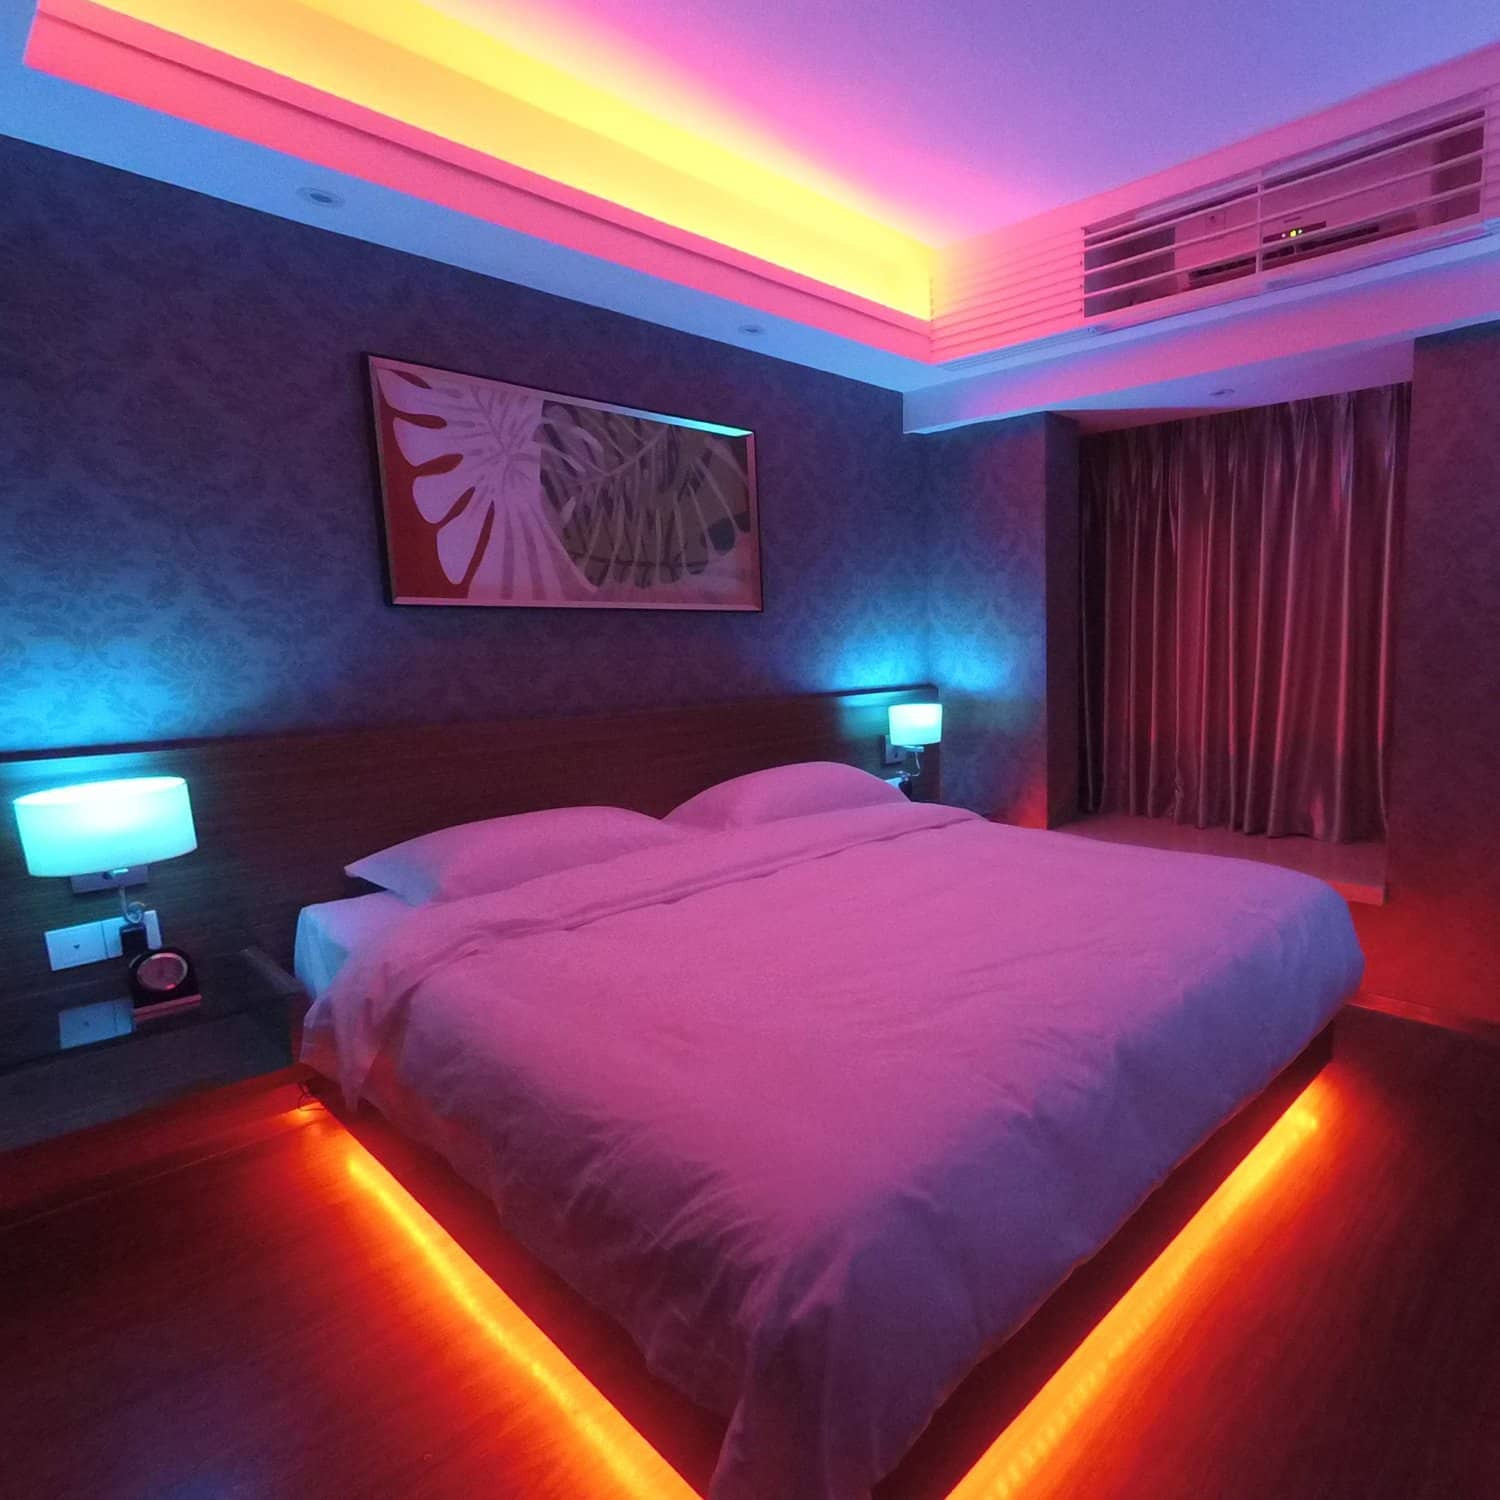 Led Lighting For Bedroom
 Revogi Smart Color LED Light Strip Reviews Coupons and Deals